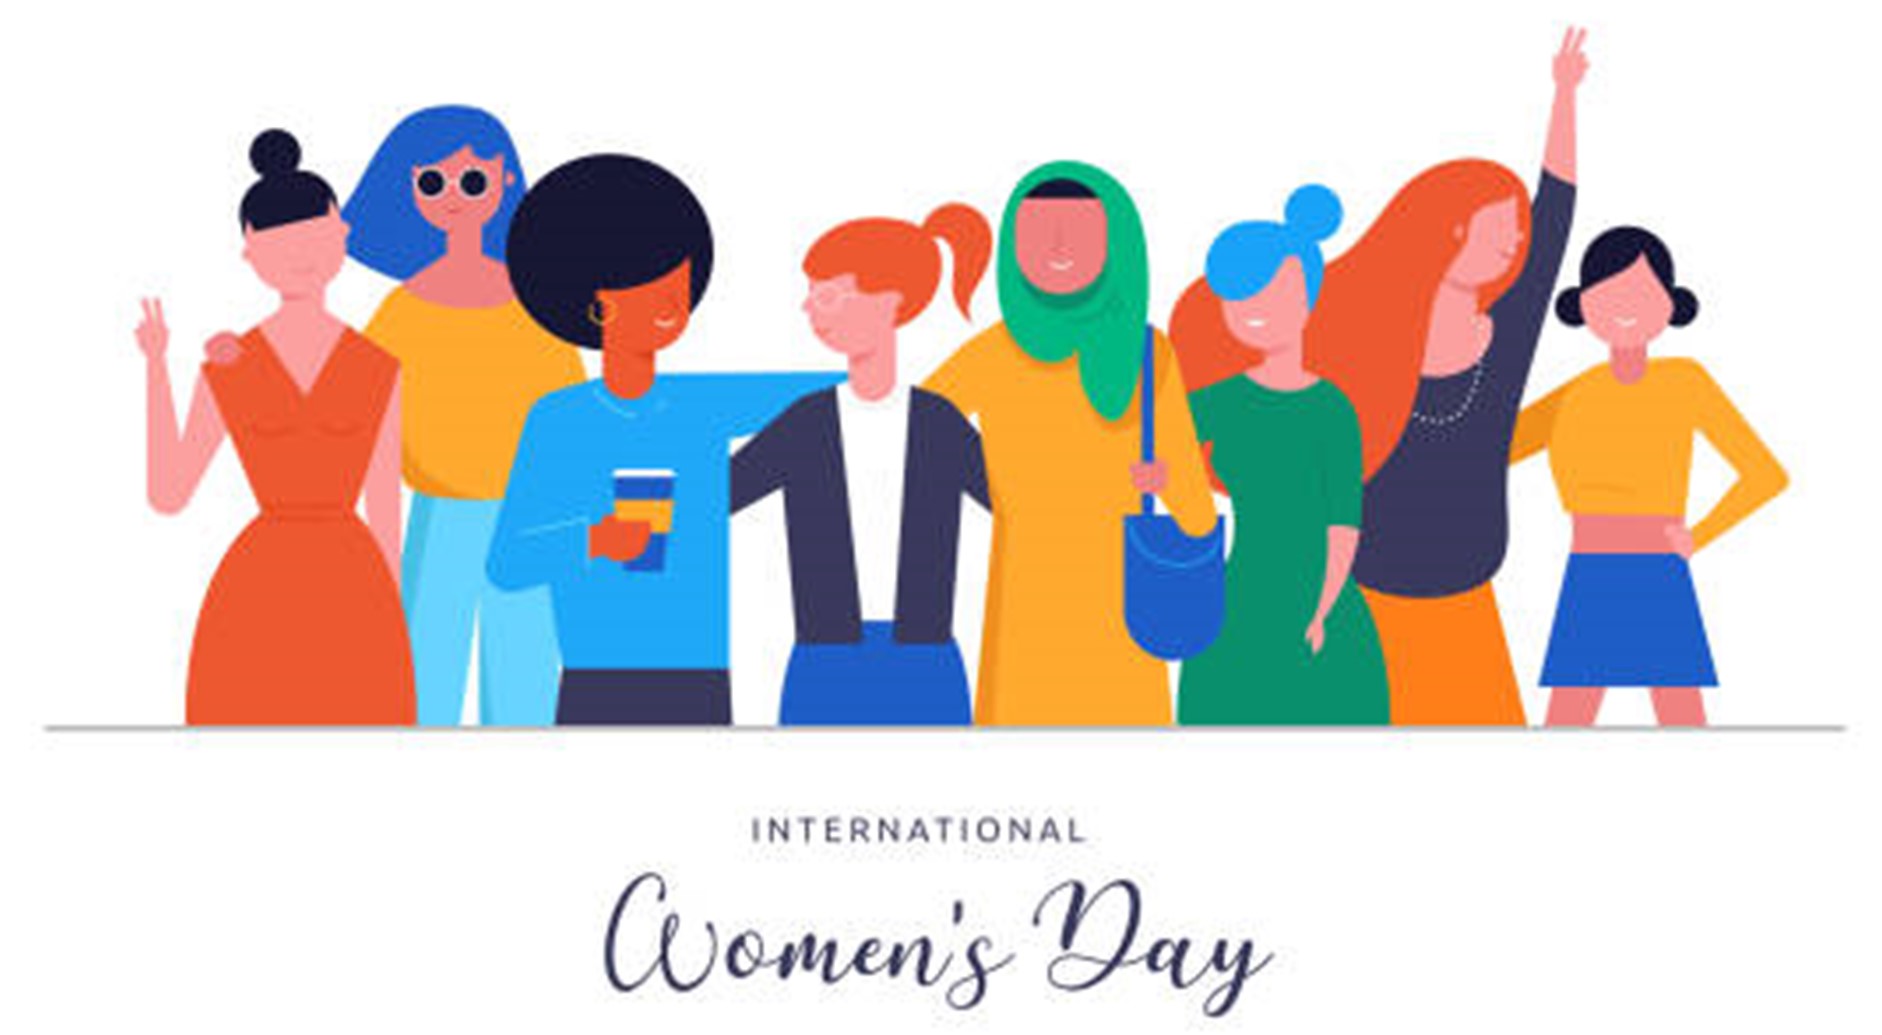 March - Celebrating Women